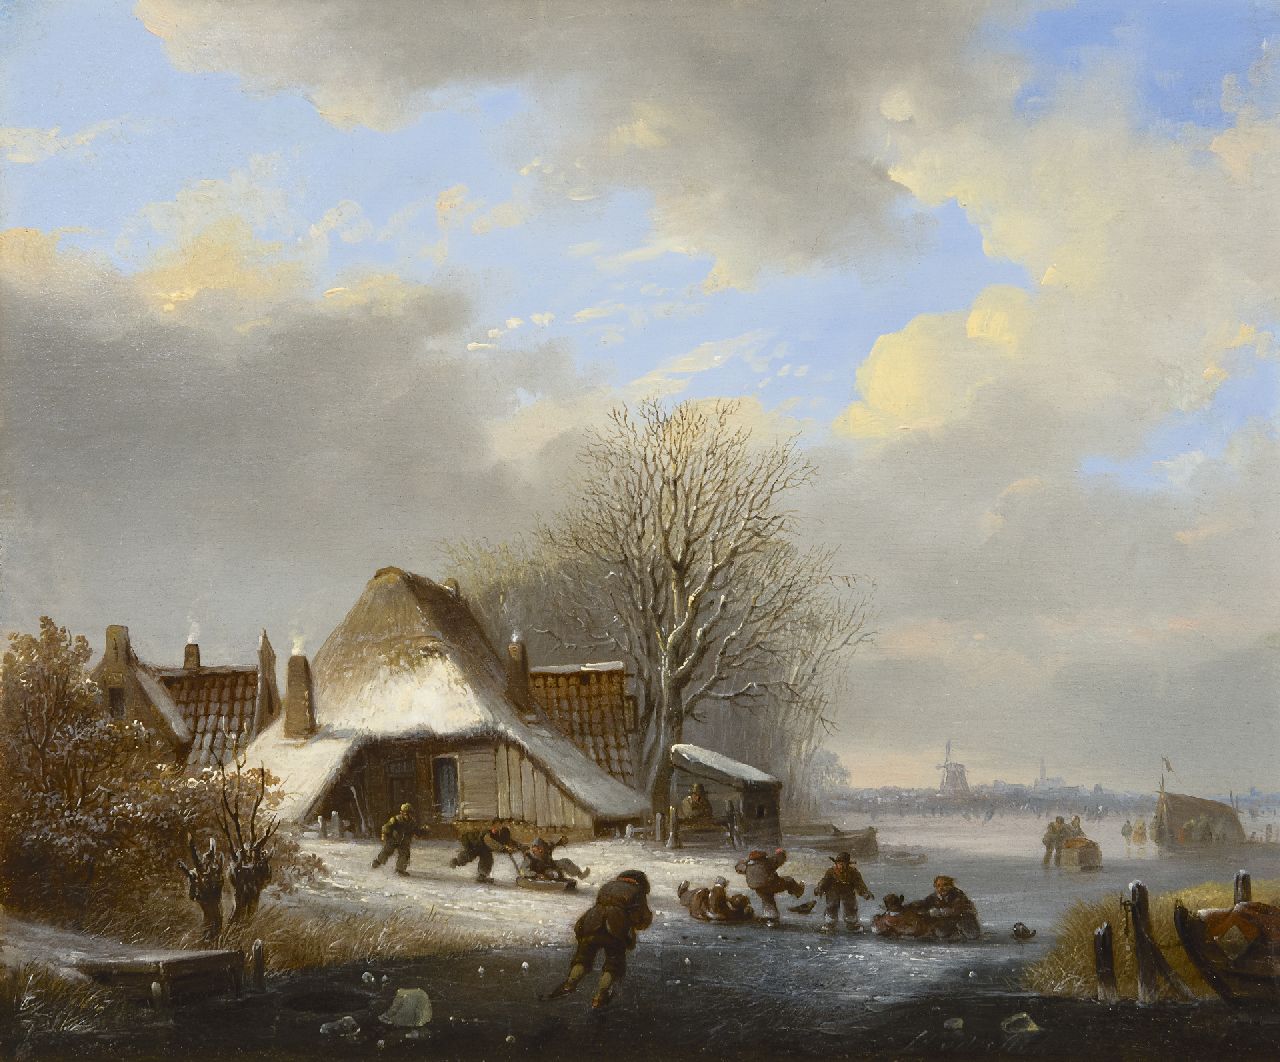 Stok J. van der | Jacobus van der Stok, Skaters and sledges on a frozen river, oil on panel 26.3 x 31.9 cm, signed l.r.